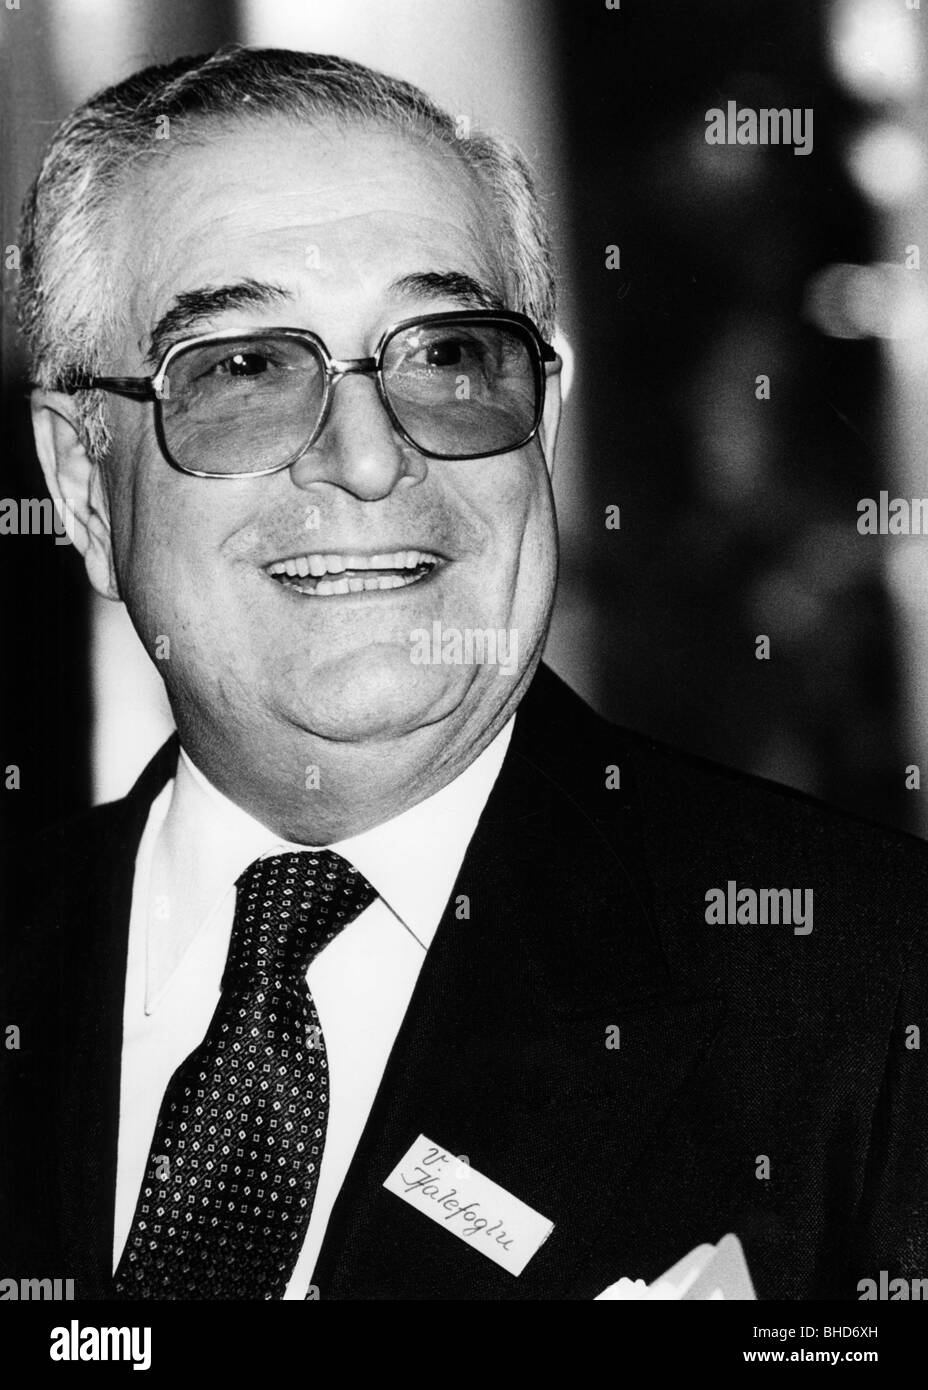 Halefoglu, Vahit Melih, * 19.11.1919, Turkish politician (ANAP), Foreign Minister 13.12.1983 - 21.12.1987, portrait, at 23rd Munich Security Conference, Bayerischer Hof, 1./2.3.1986, , Stock Photo